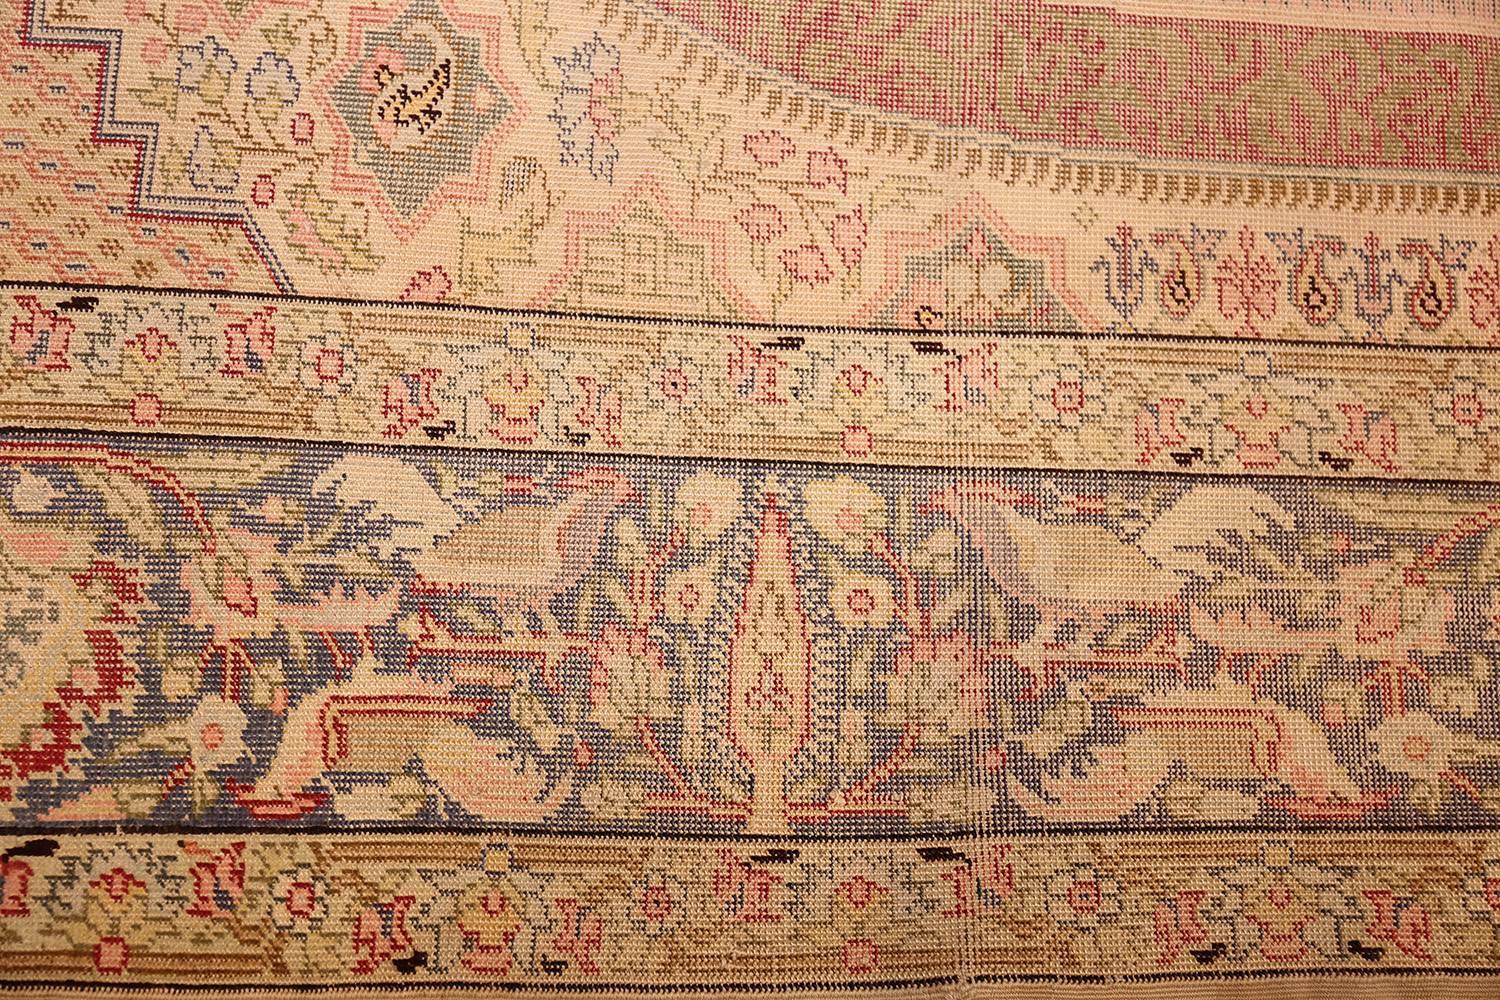 Other Silk Antique Keysari Turkish Rug. Size: 3 ft 9 in x 6 ft 6 in (1.14 m x 1.98 m)